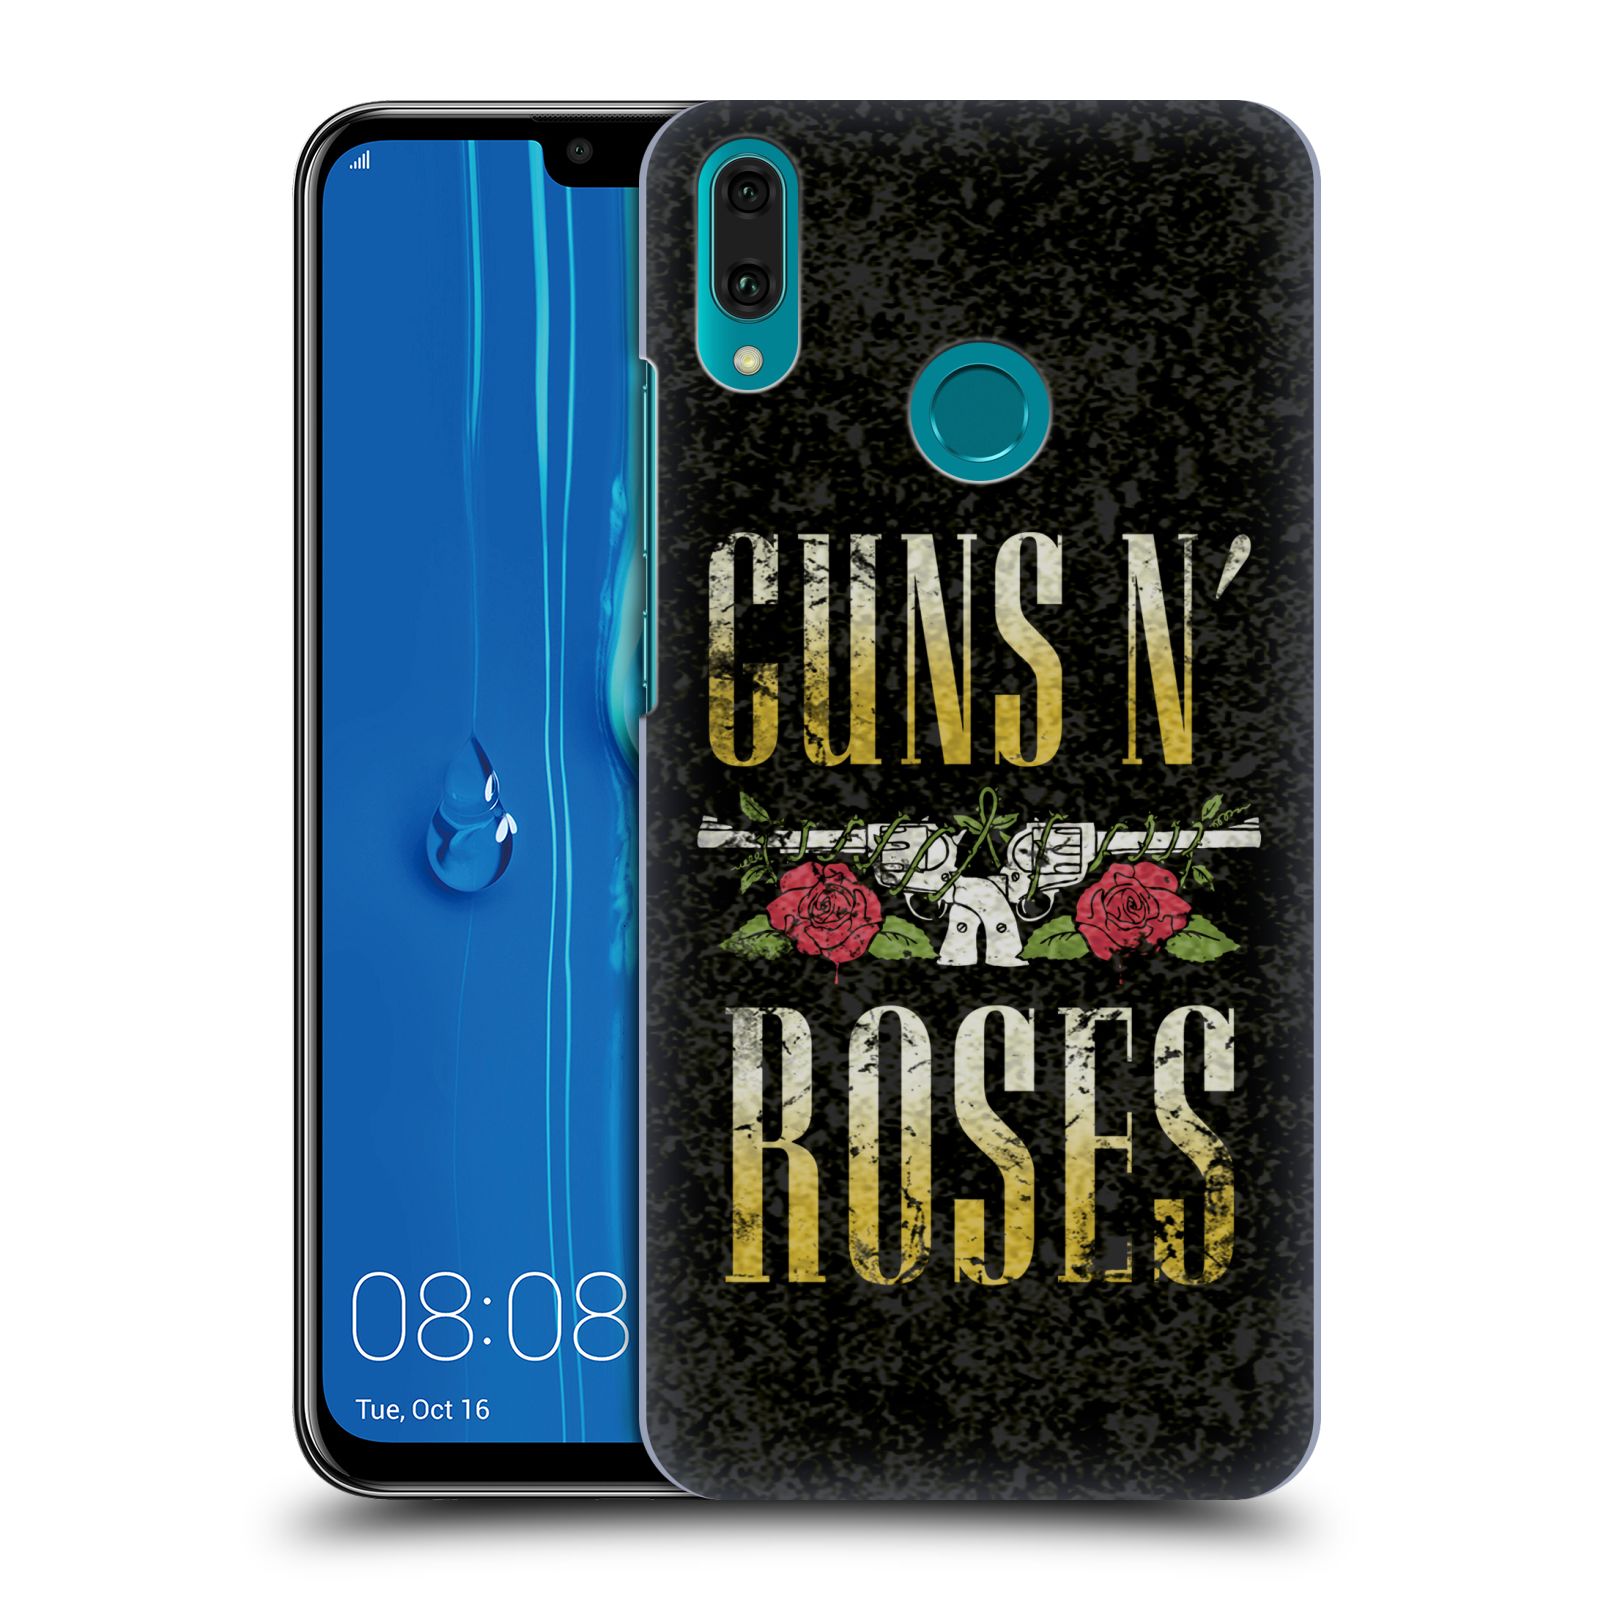 Pouzdro na mobil Huawei Y9 2019 - HEAD CASE - hudební skupina Guns N Roses text